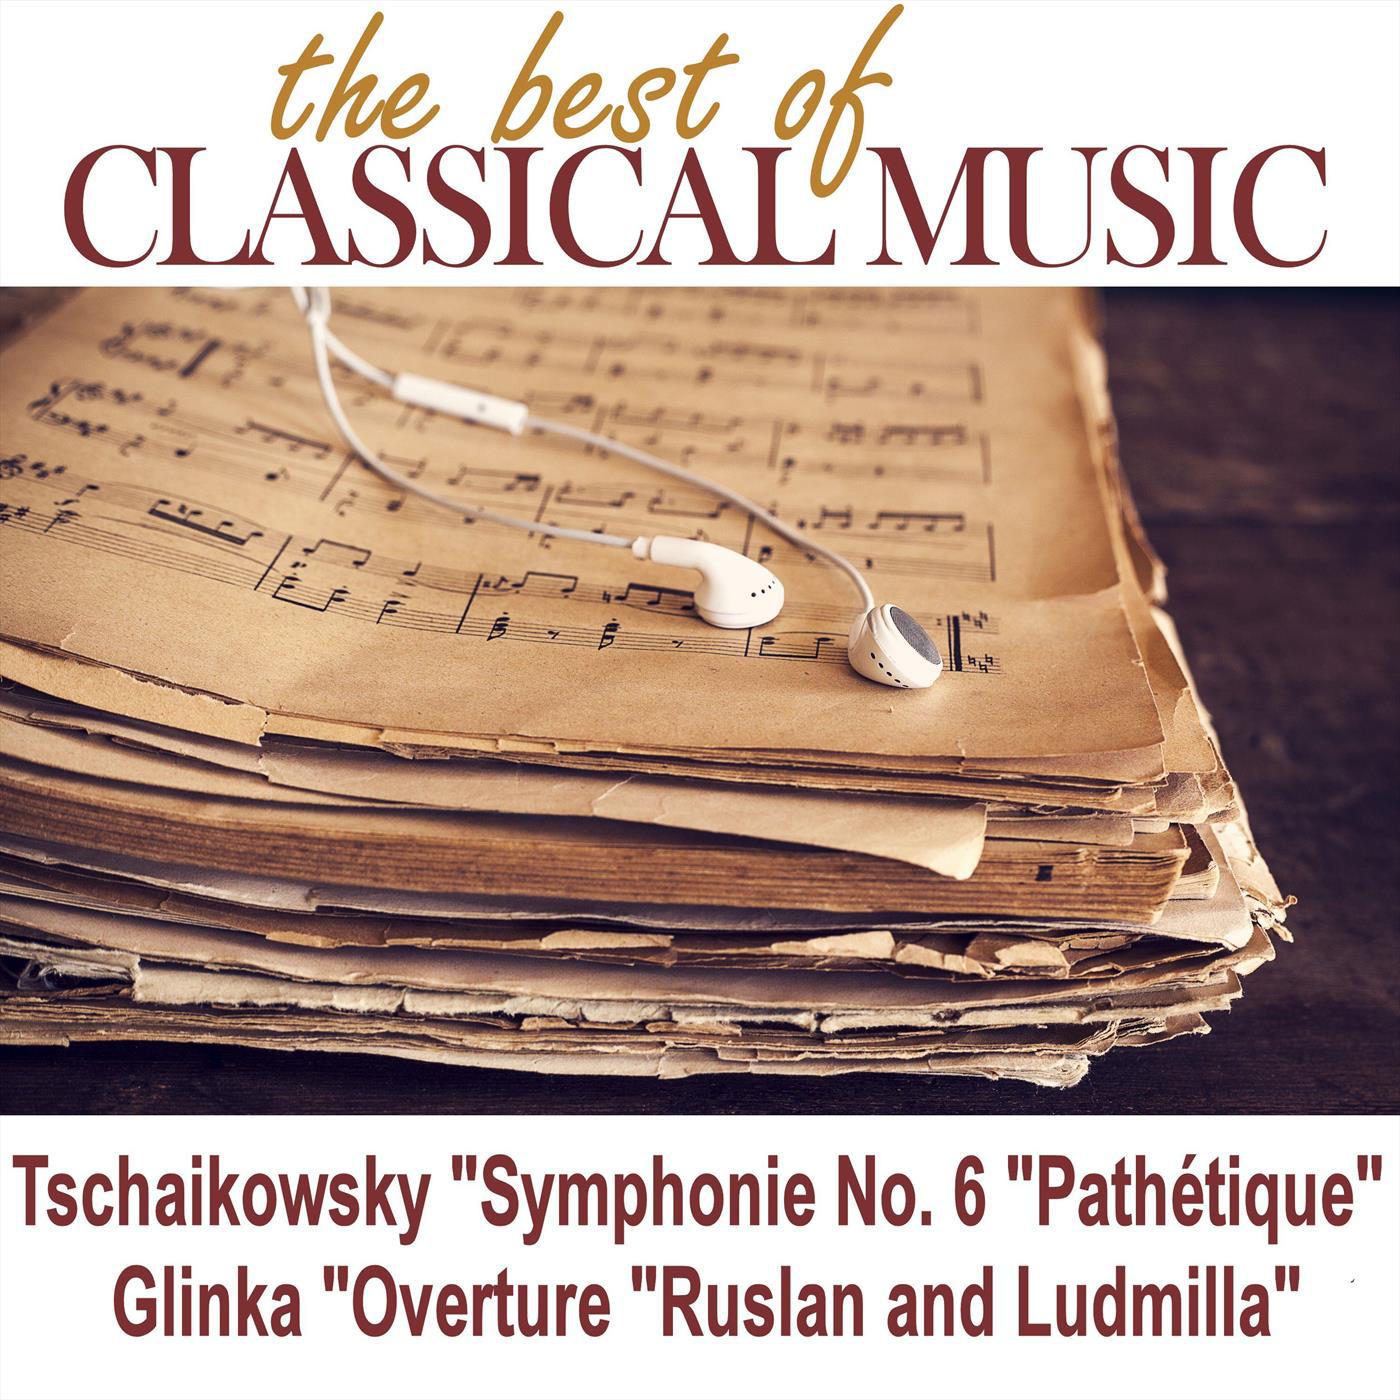 Symphony no.6 in b - minor, op.74 "Pathetique" - Allegro molto vivace (Tchaikovsky)